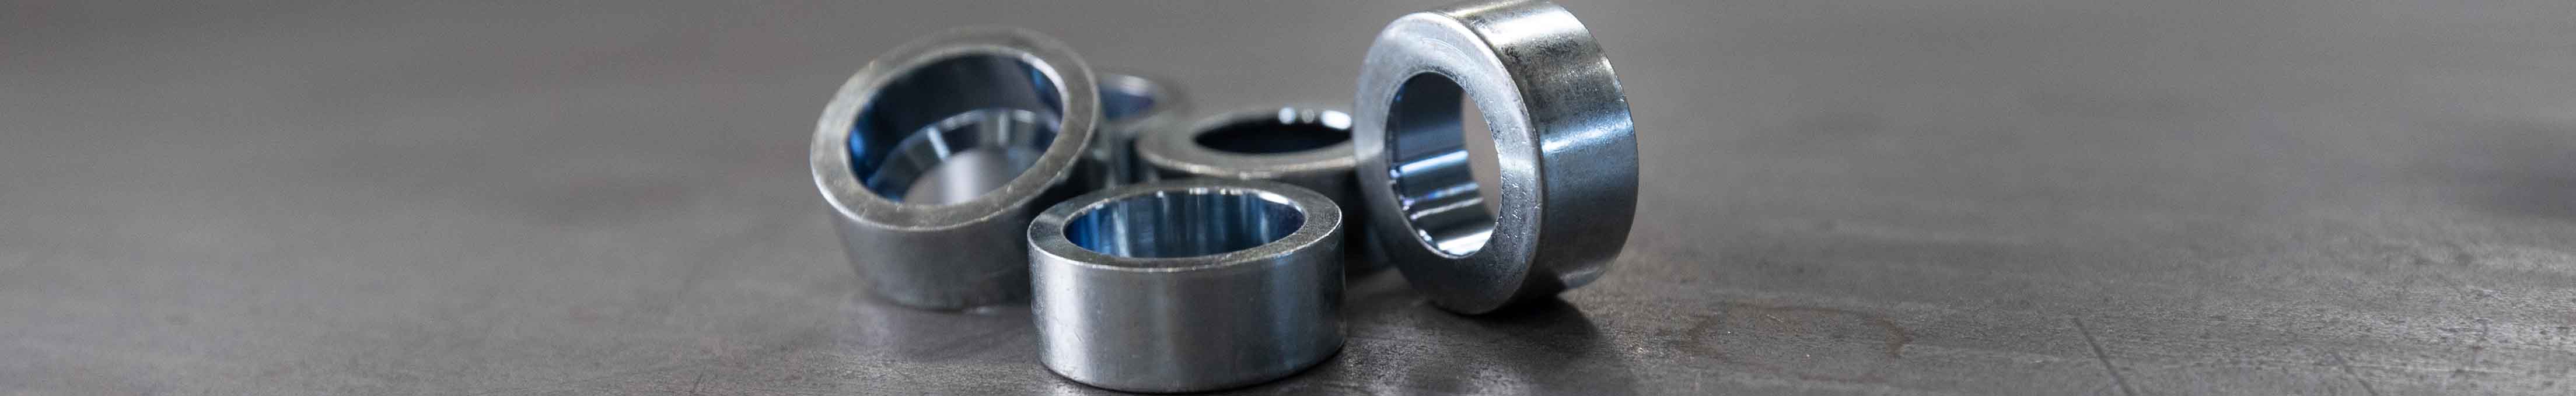  autoriv fasteners automation abstandshalter isolator chemische trennung material metall stahl aluminium kunststoff